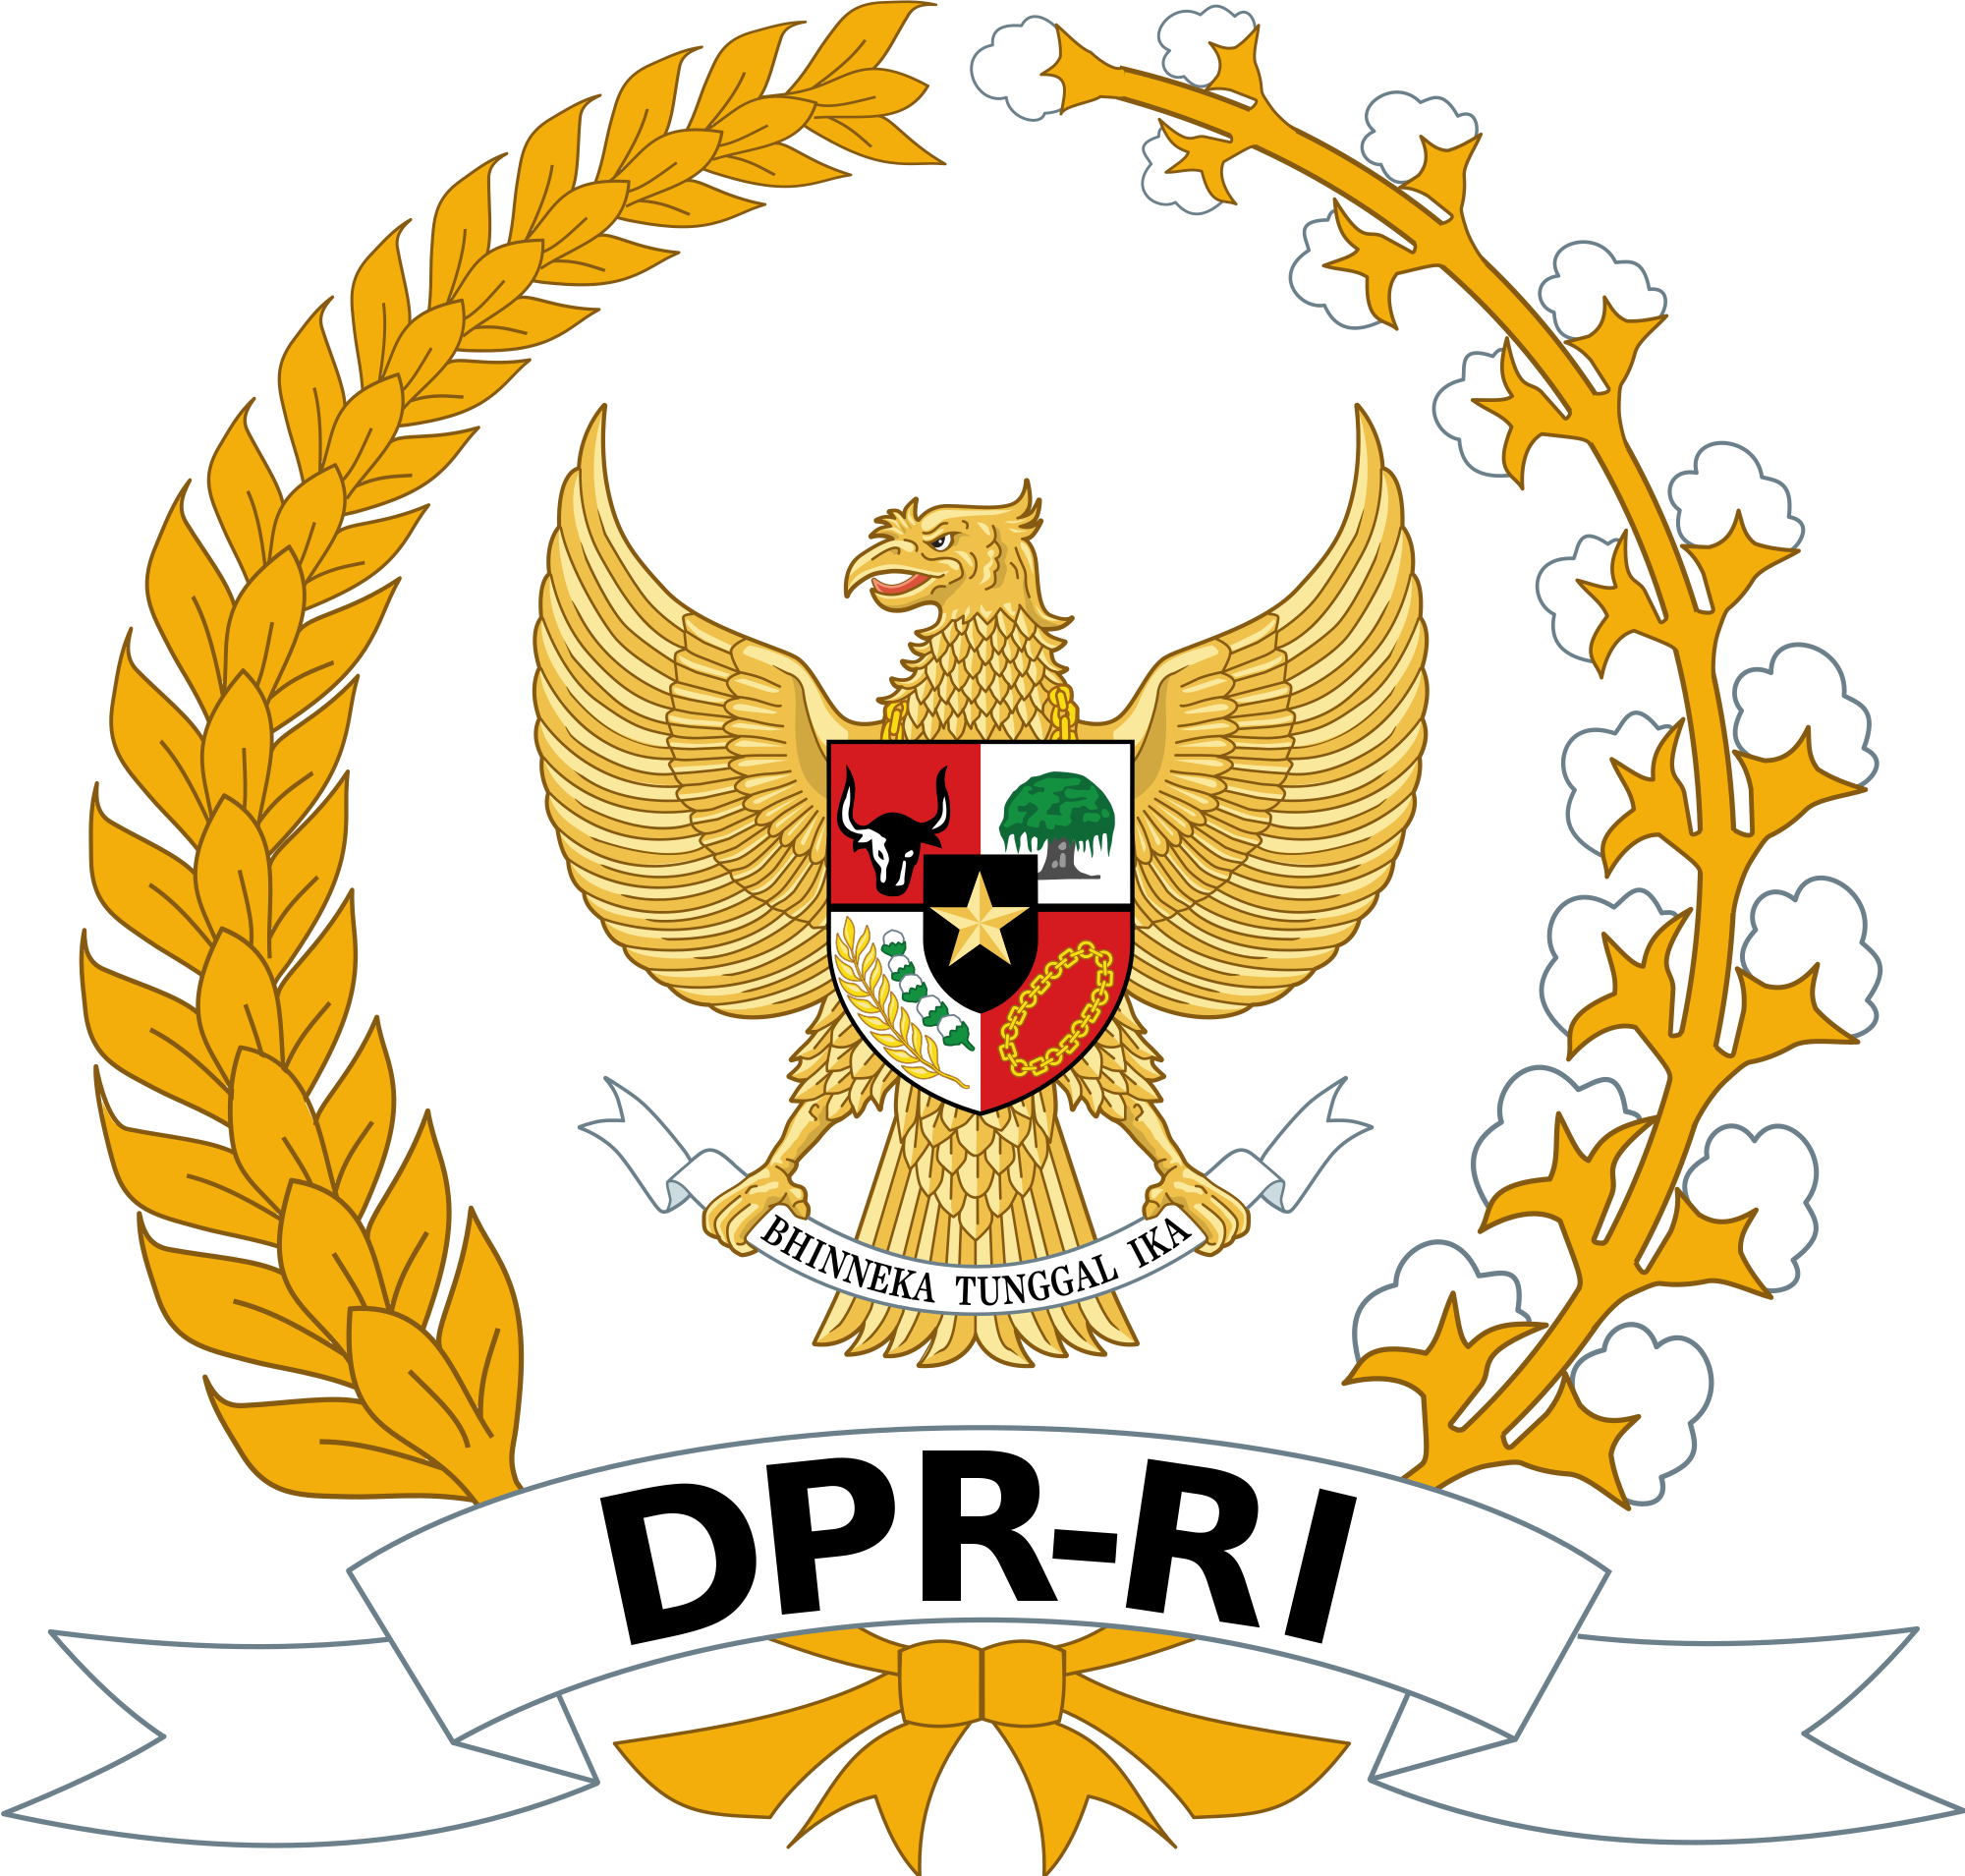 People's Representative Council, Republic of Indonesia